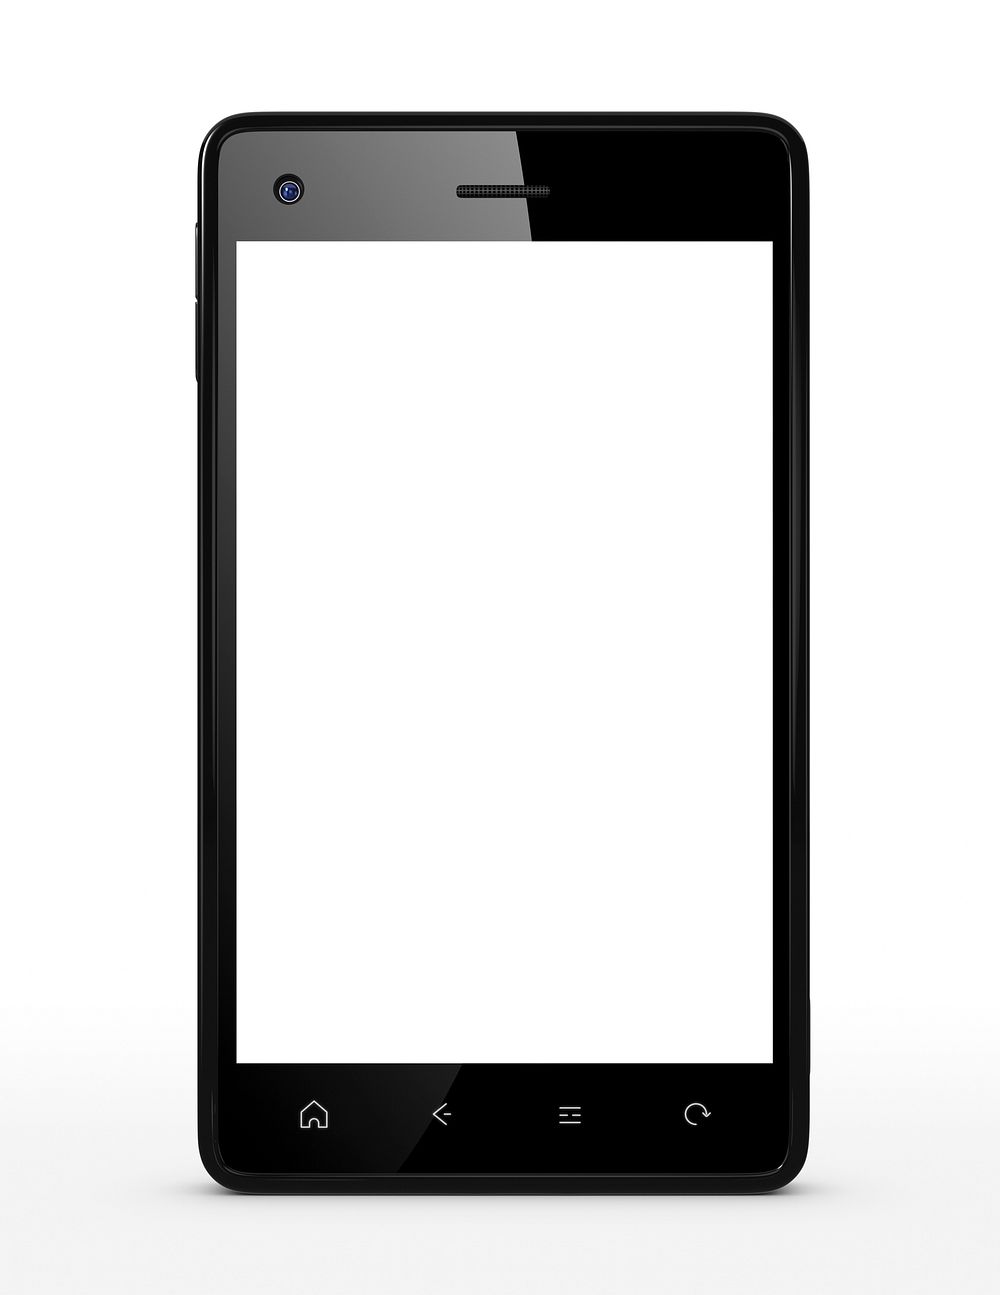 Black Mobile Phone.